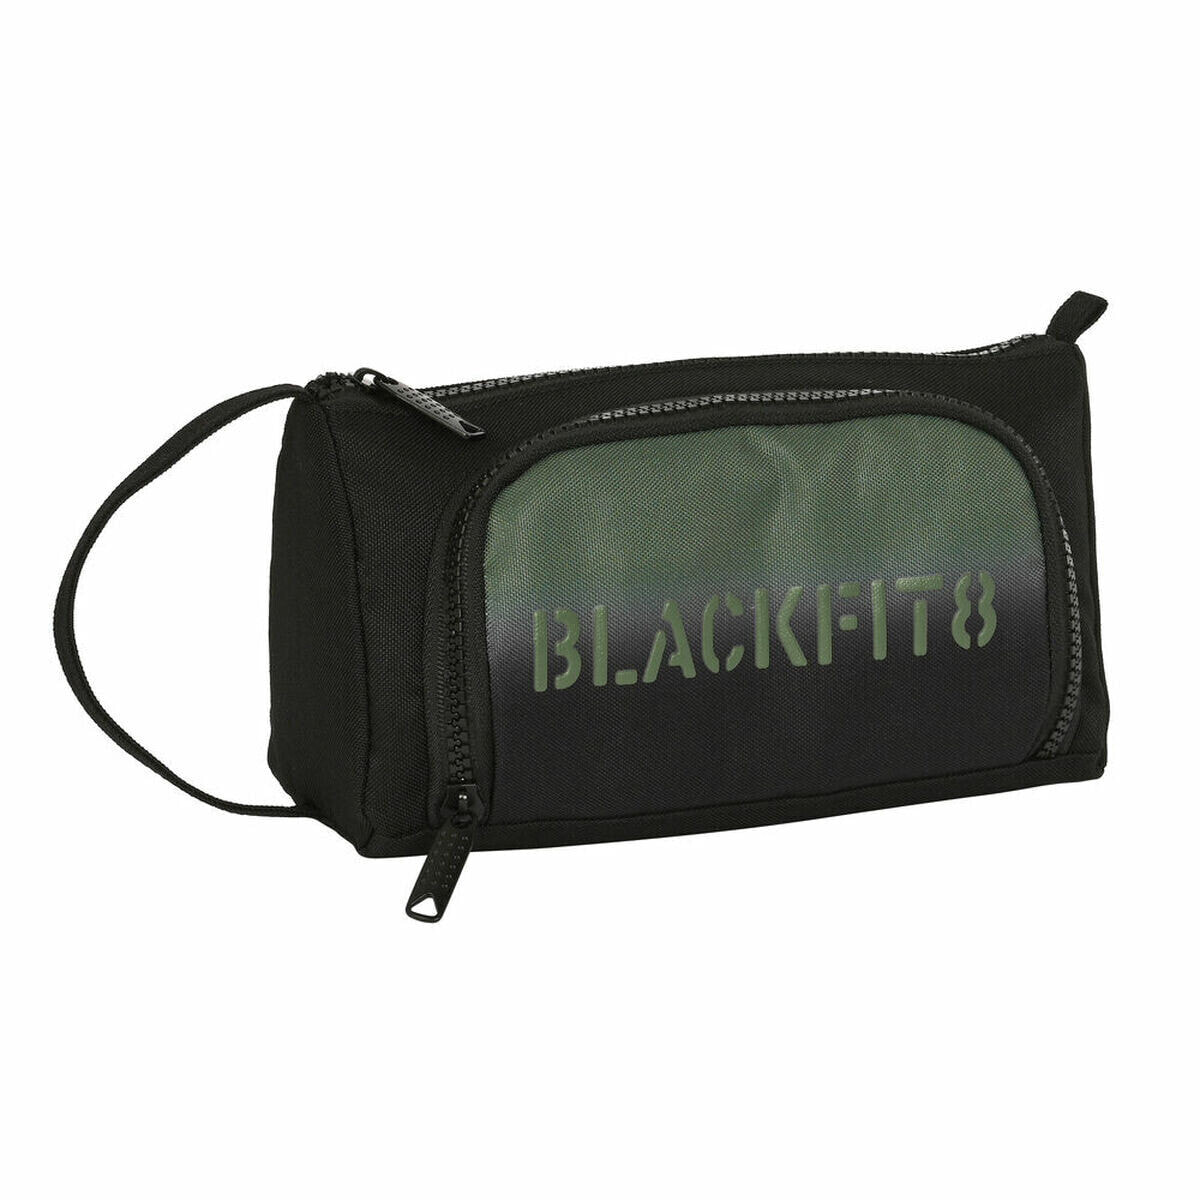 School Case BlackFit8 Gradient Black Military green 20 x 11 x 8.5 cm